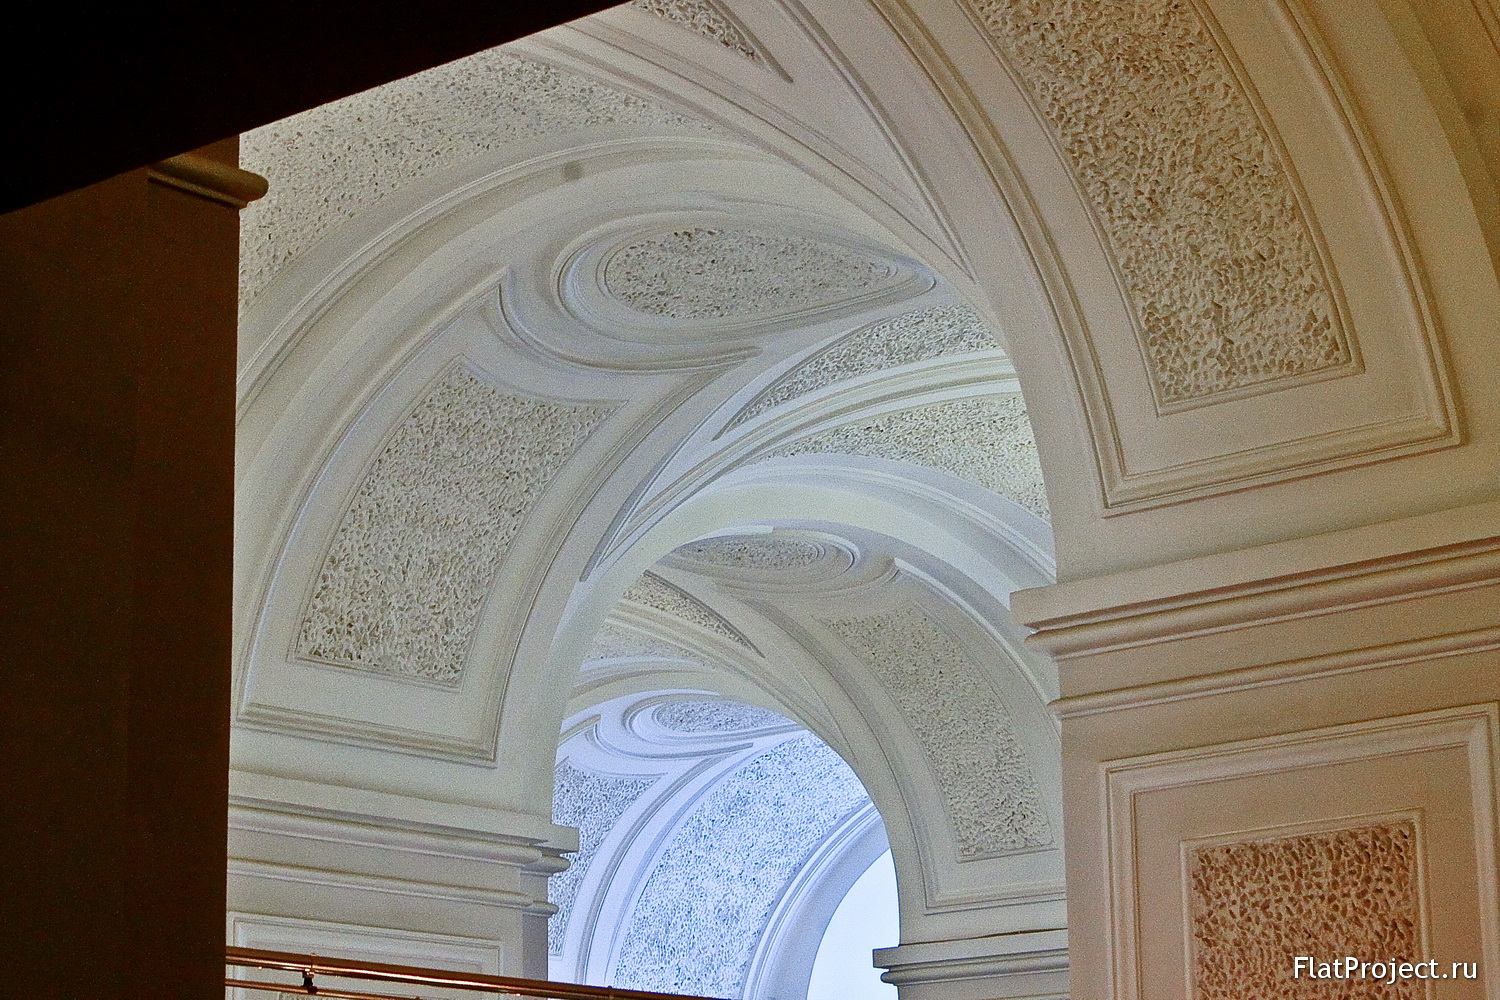 The Catherine Palace interiors – photo 2